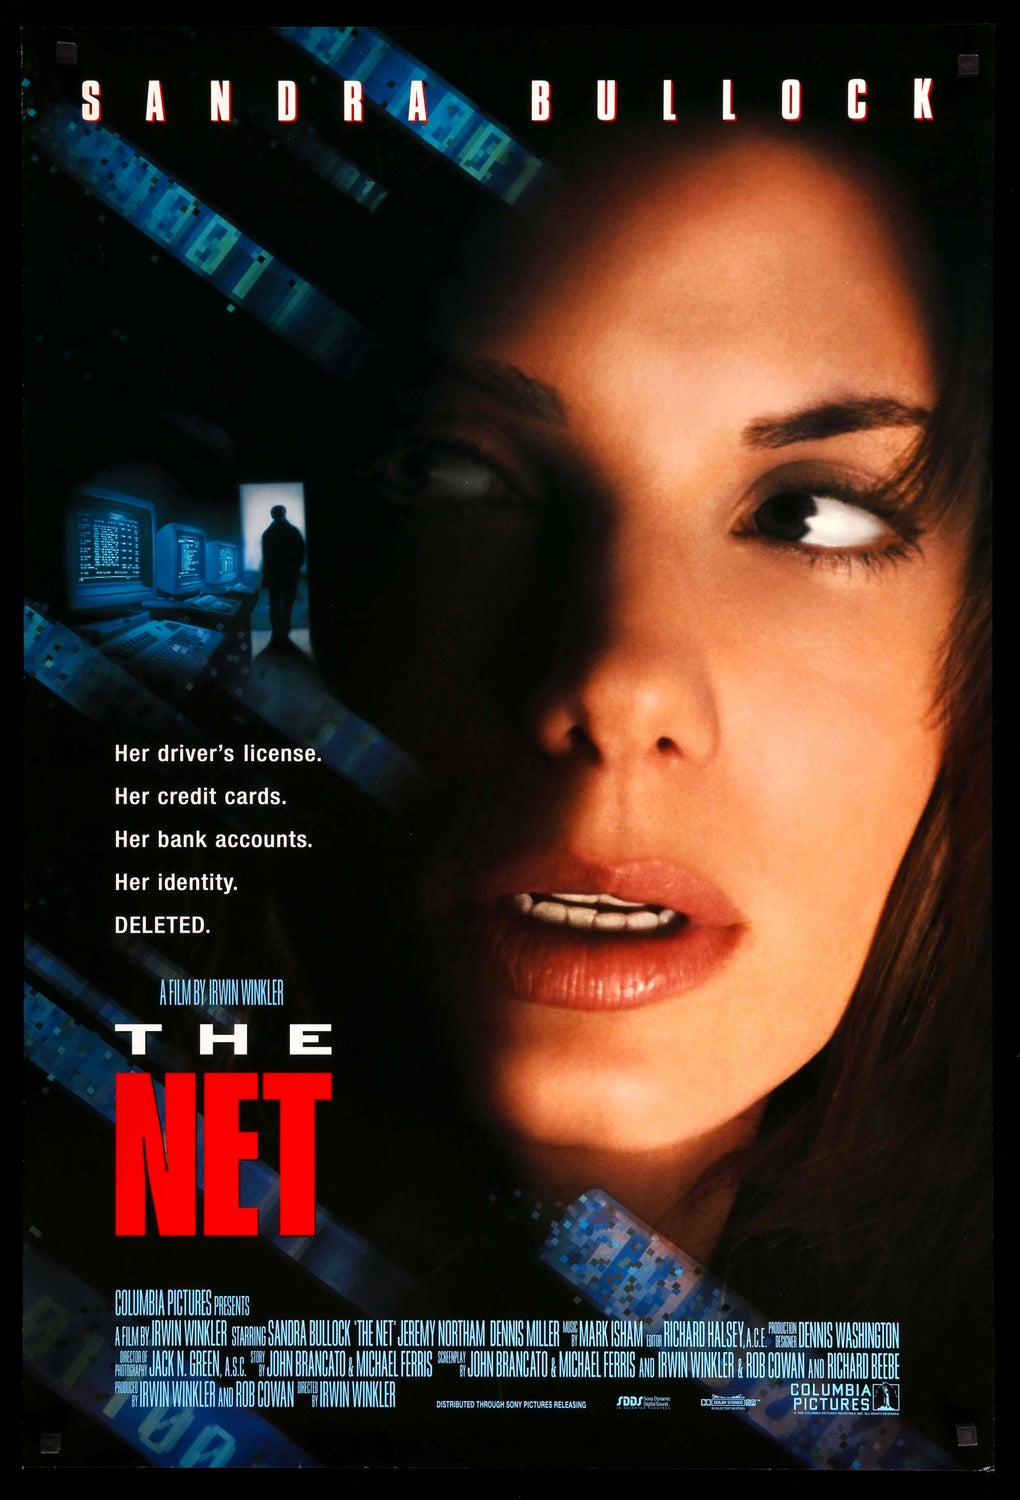 Net (1995) original movie poster for sale at Original Film Art